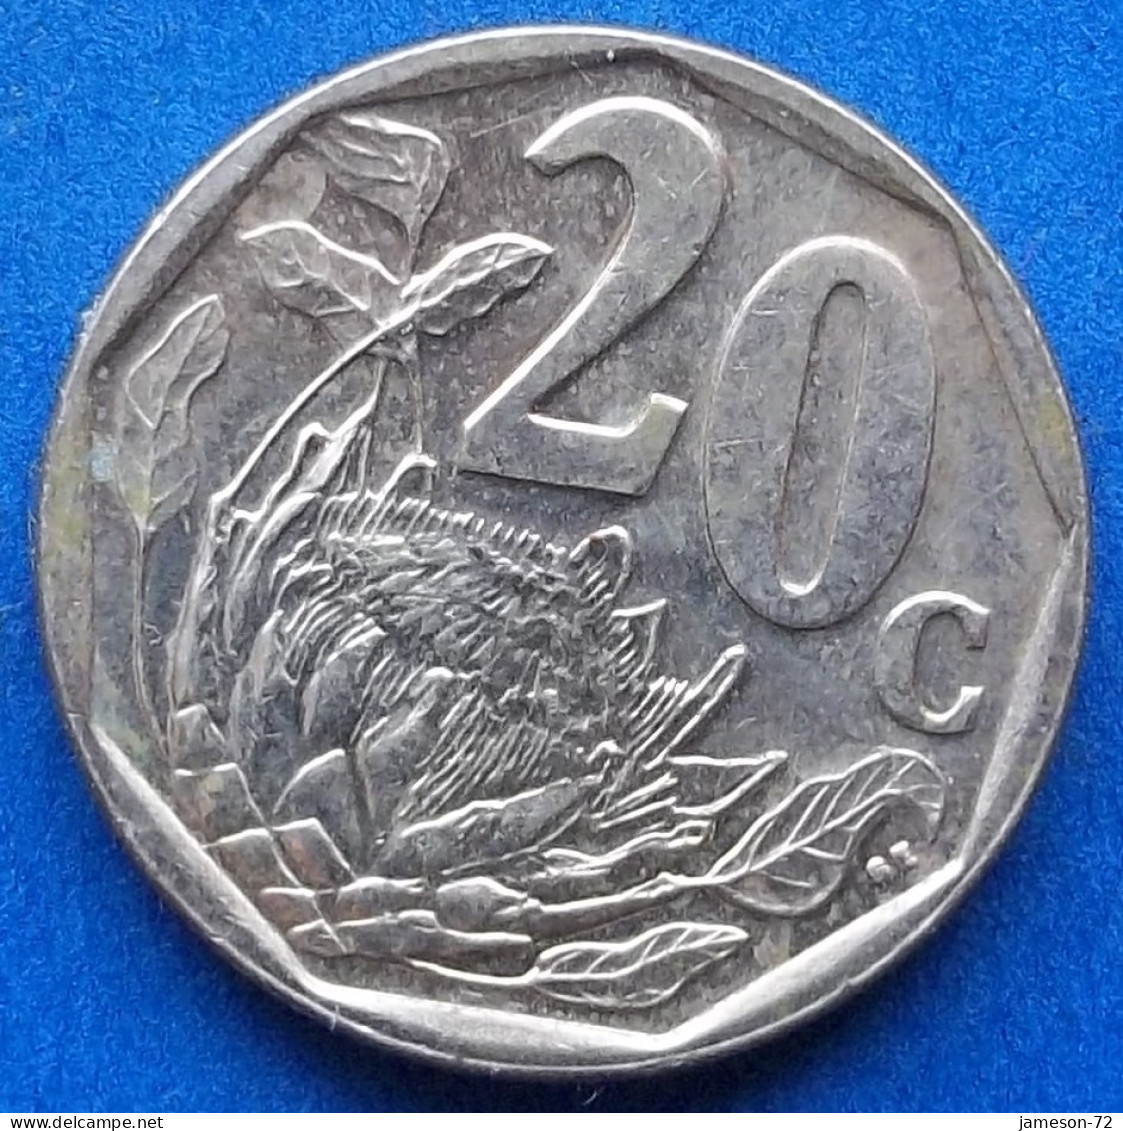 SOUTH AFRICA - 20 Cents 2021 "Protea Flower" KM# 442 Republic (1961) - Edelweiss Coins - Südafrika